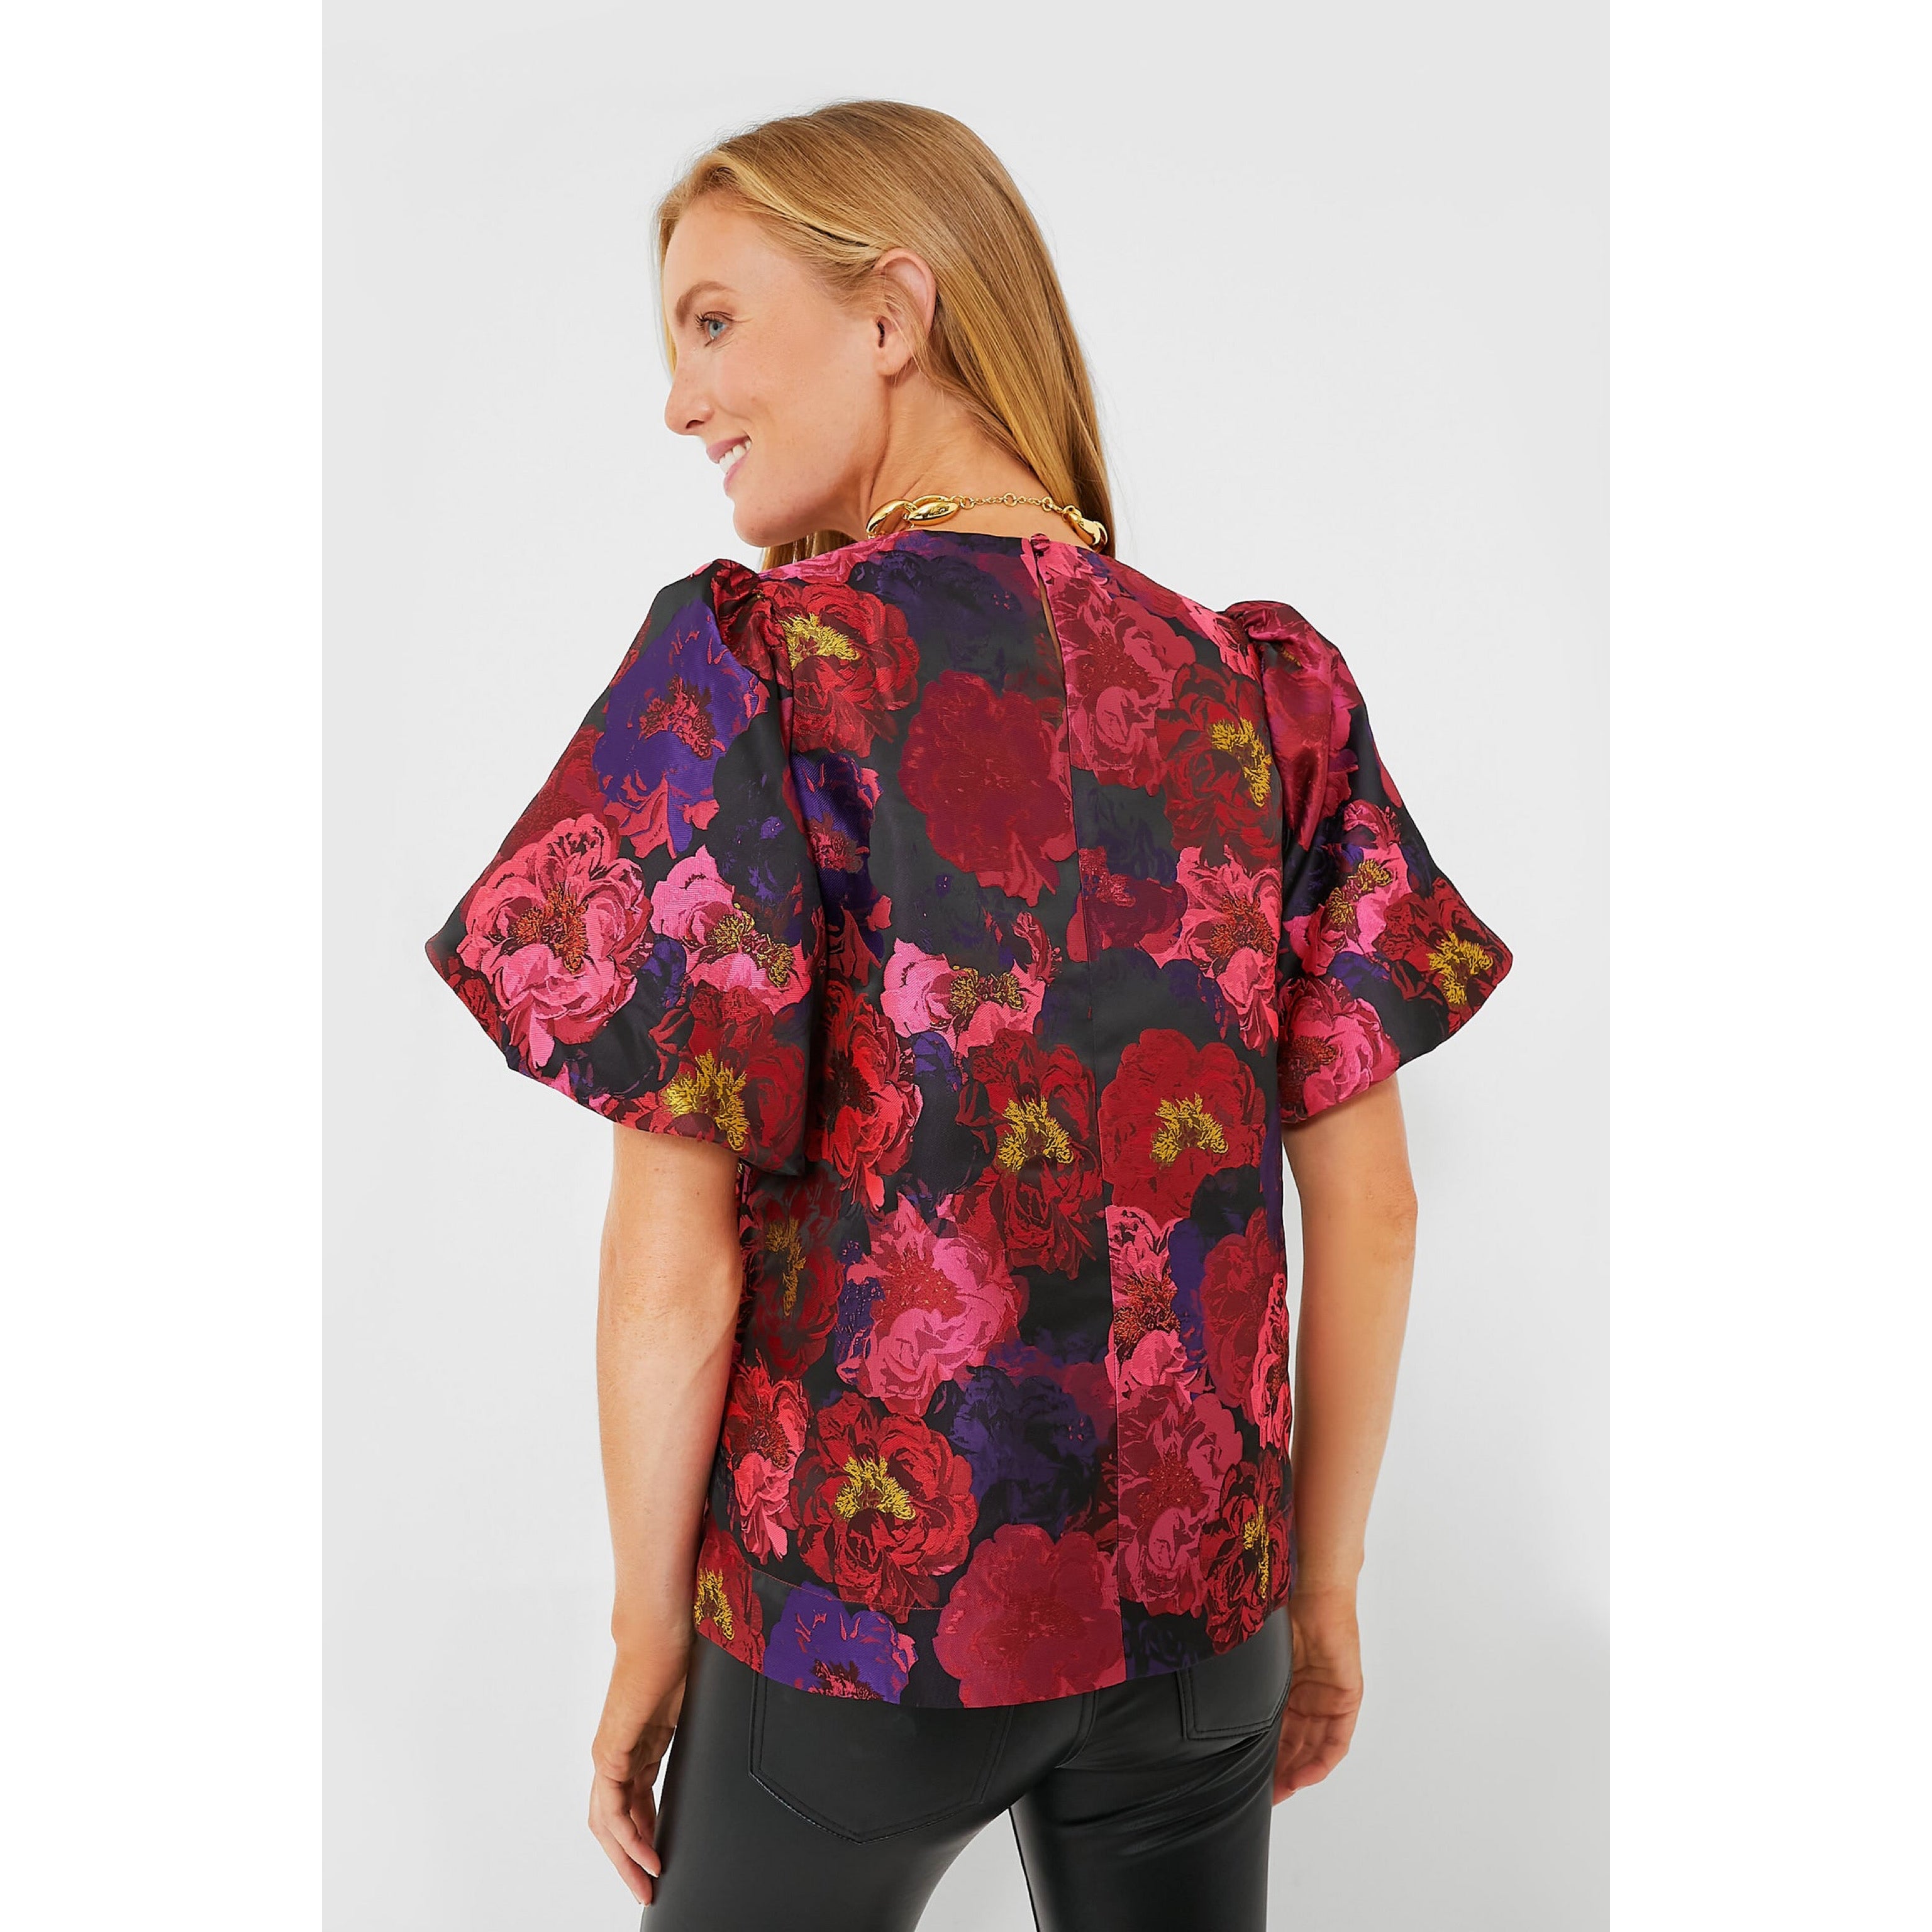 Pomander Place red camellia jacquard Lyla blouse, size M